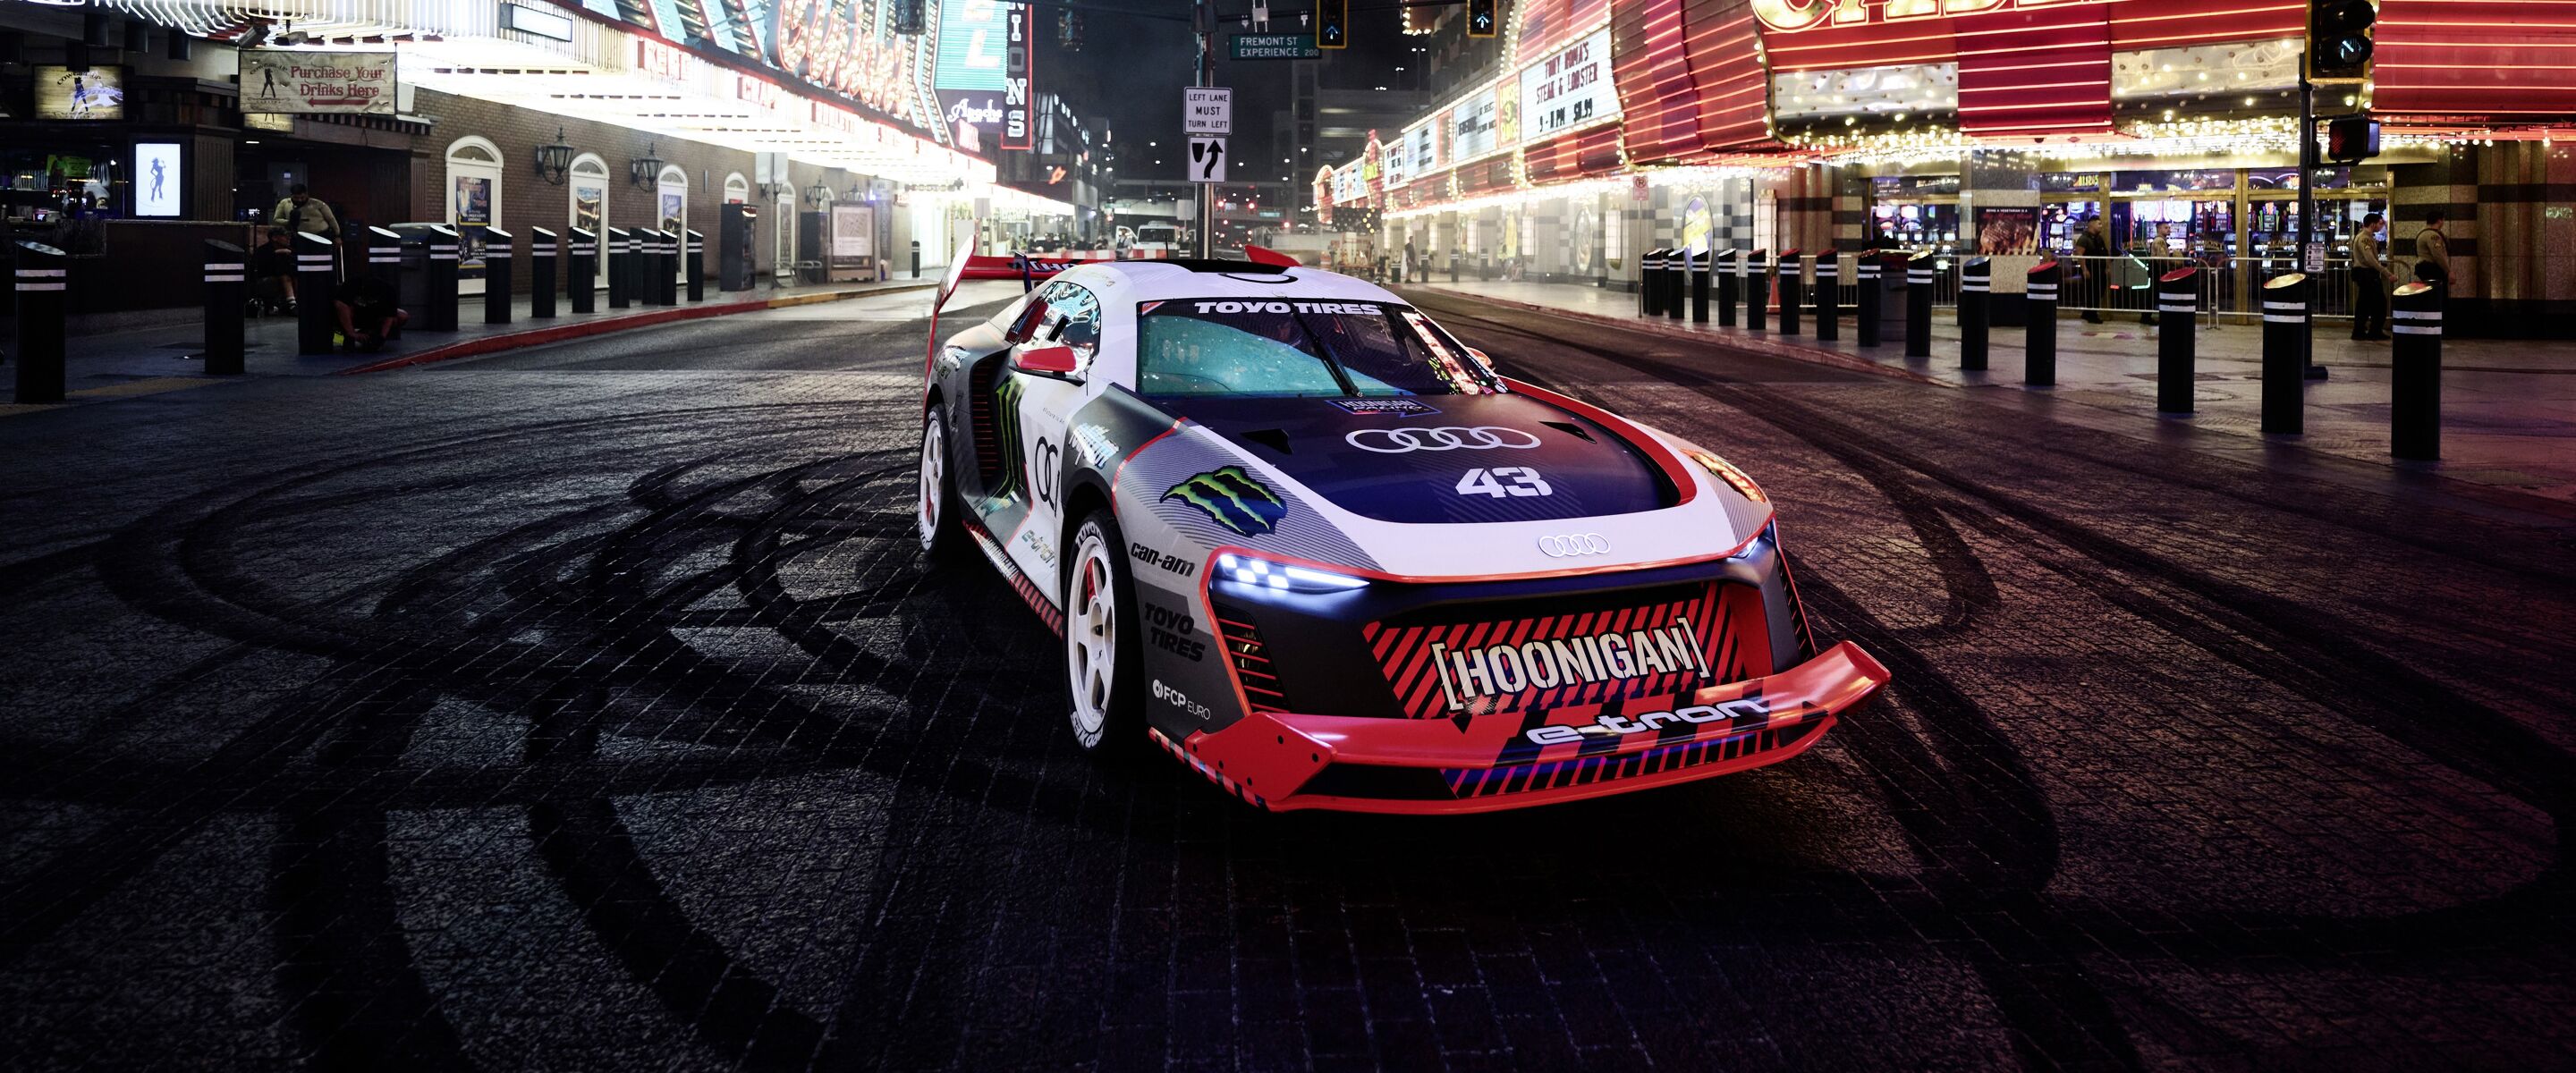 Ken Block vlamt in de Audi S1 Hoonitron in Las Vegas